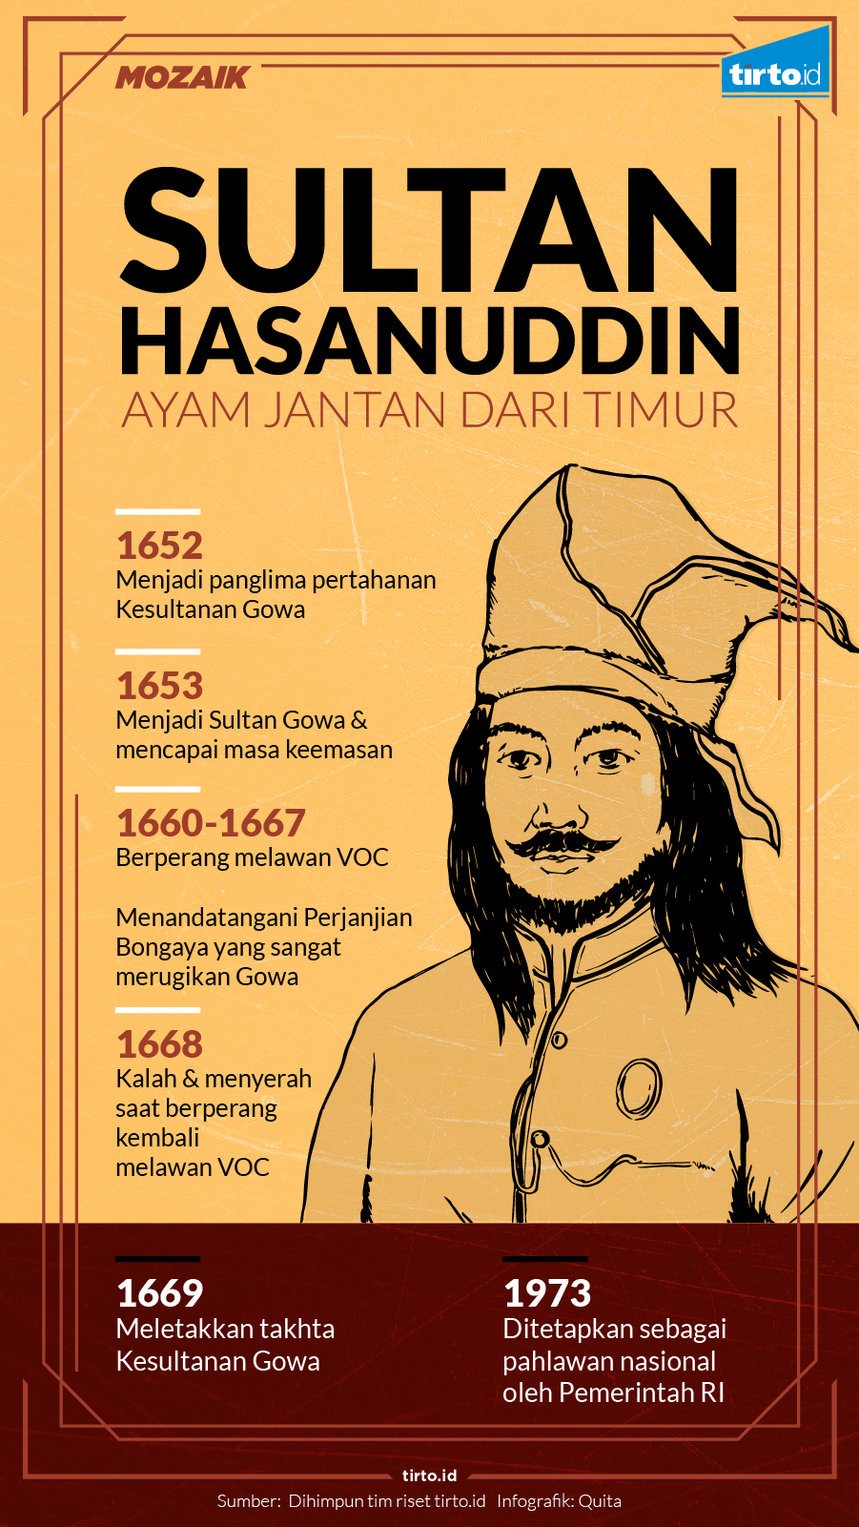 Infografik Mozaik Sultan hasanuddin